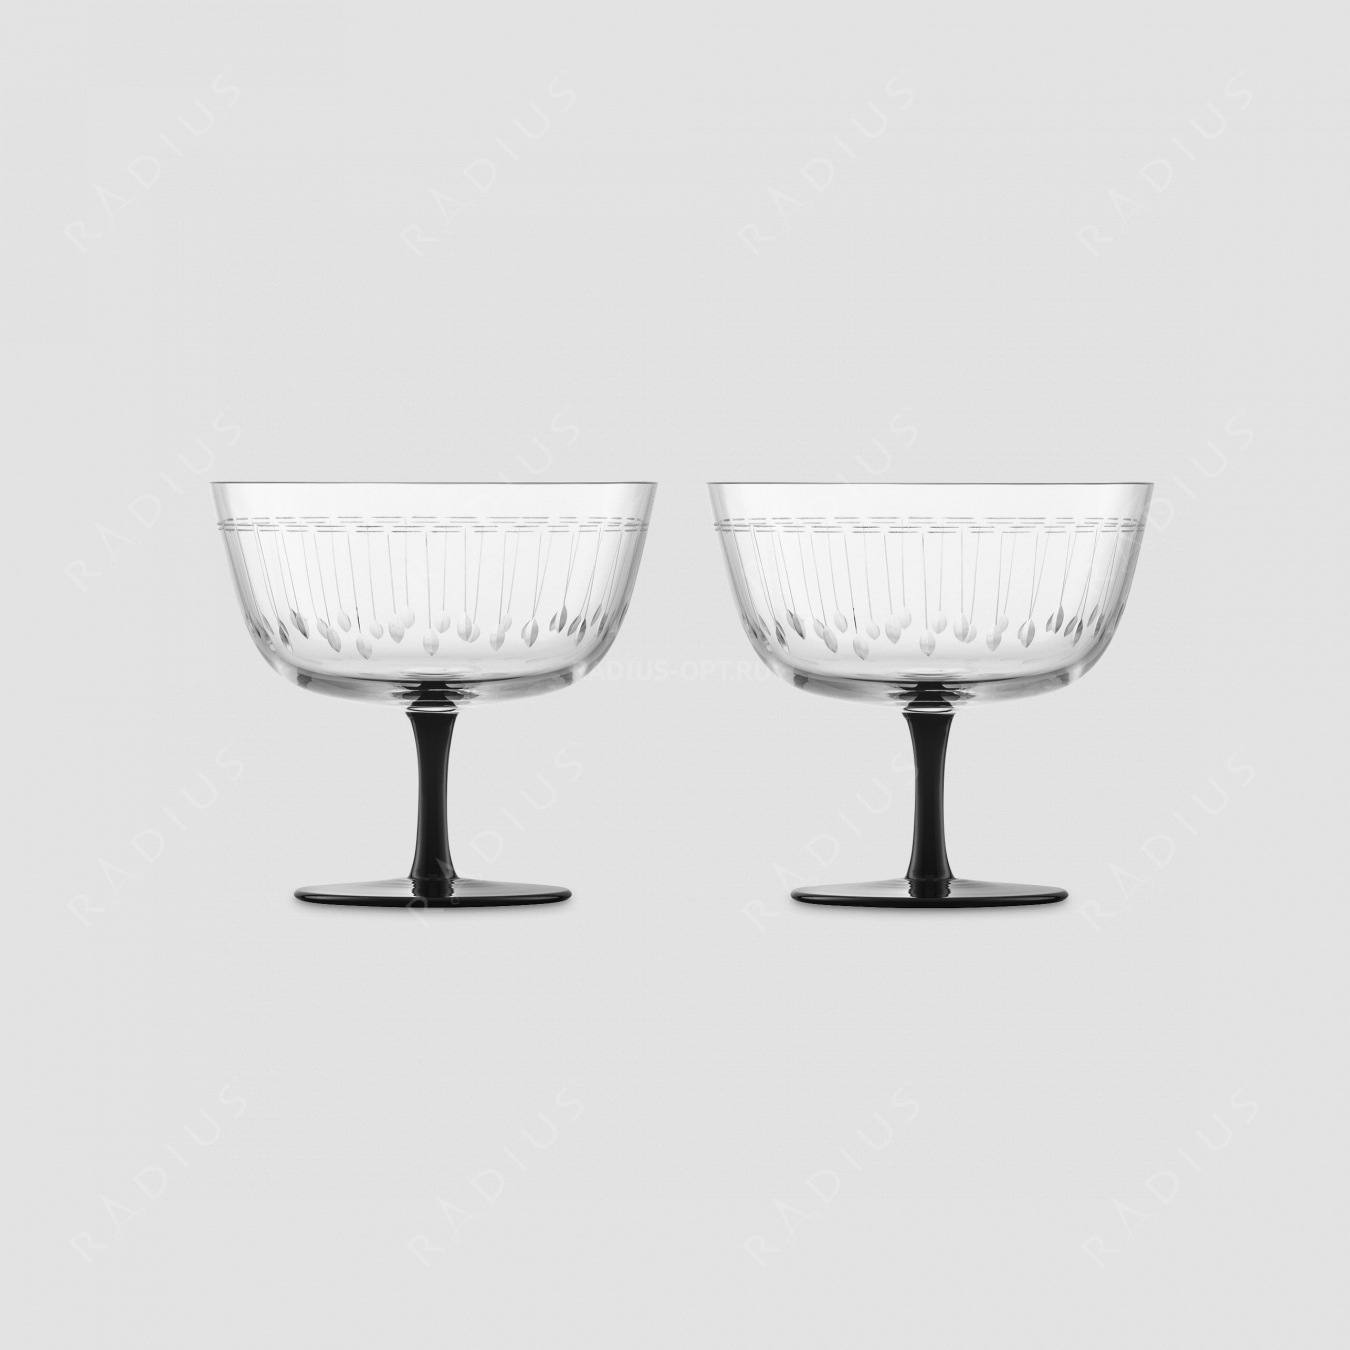 Набор бокалов в форме чаши для коктейля, ручная работа, объем 260 мл, 2 шт., серия Glamorous, ZWIESEL GLAS, Германия